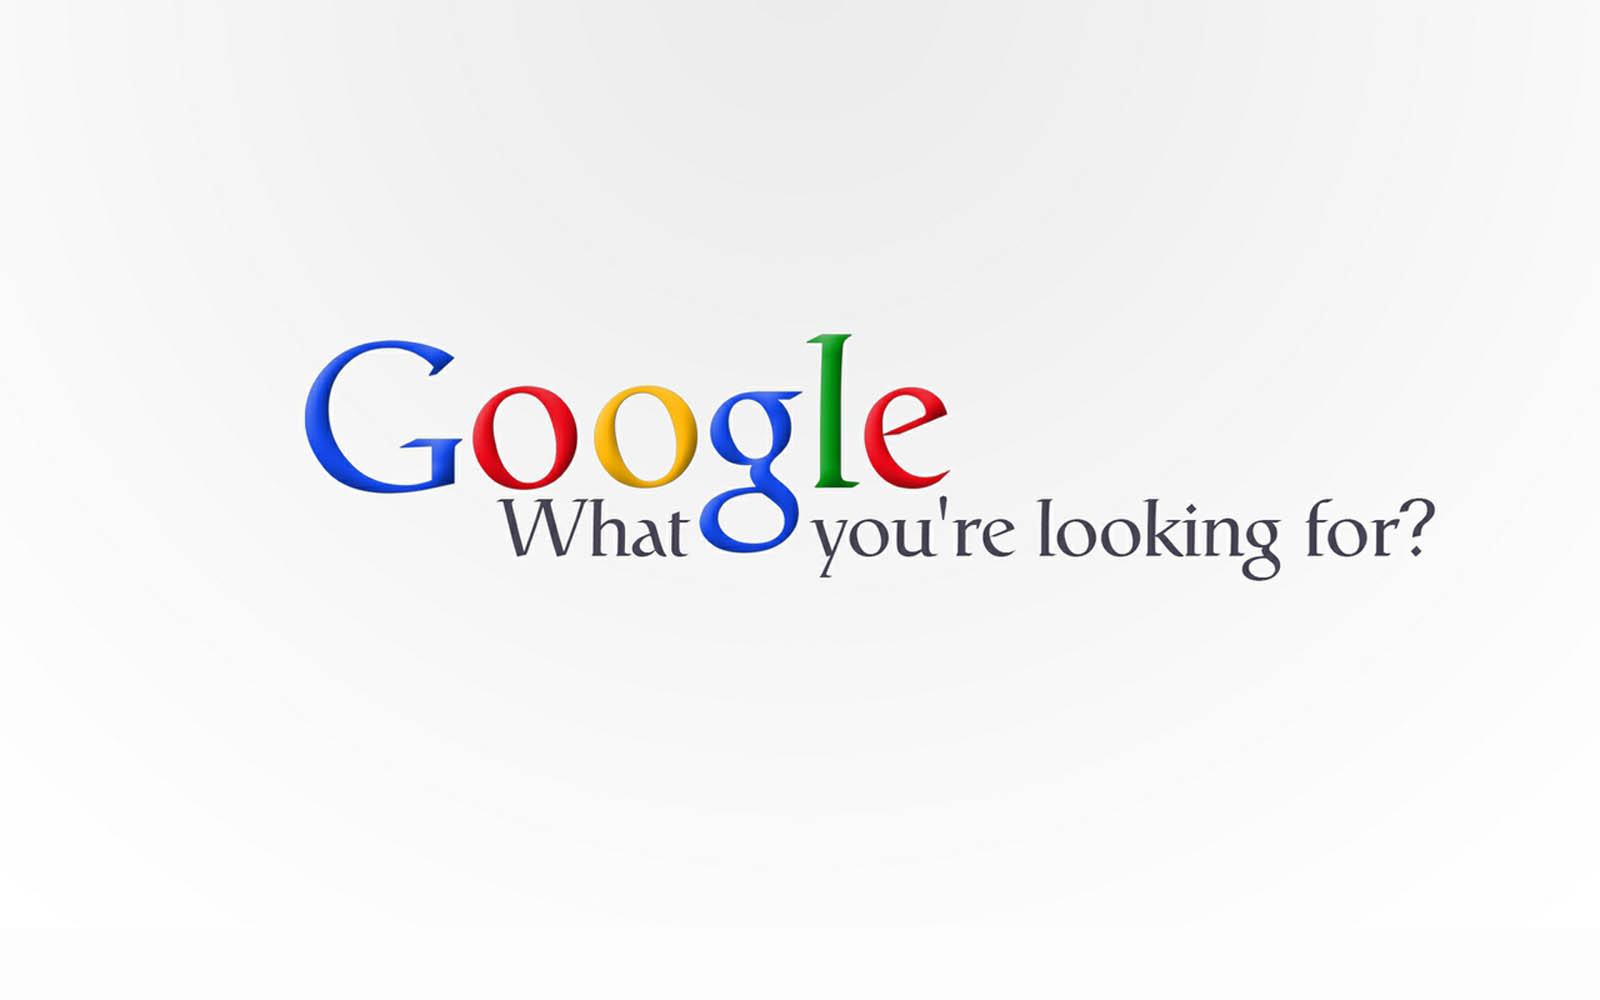 Keywords Google Wallpapers Google Desktop Wallpapers Google Desktop